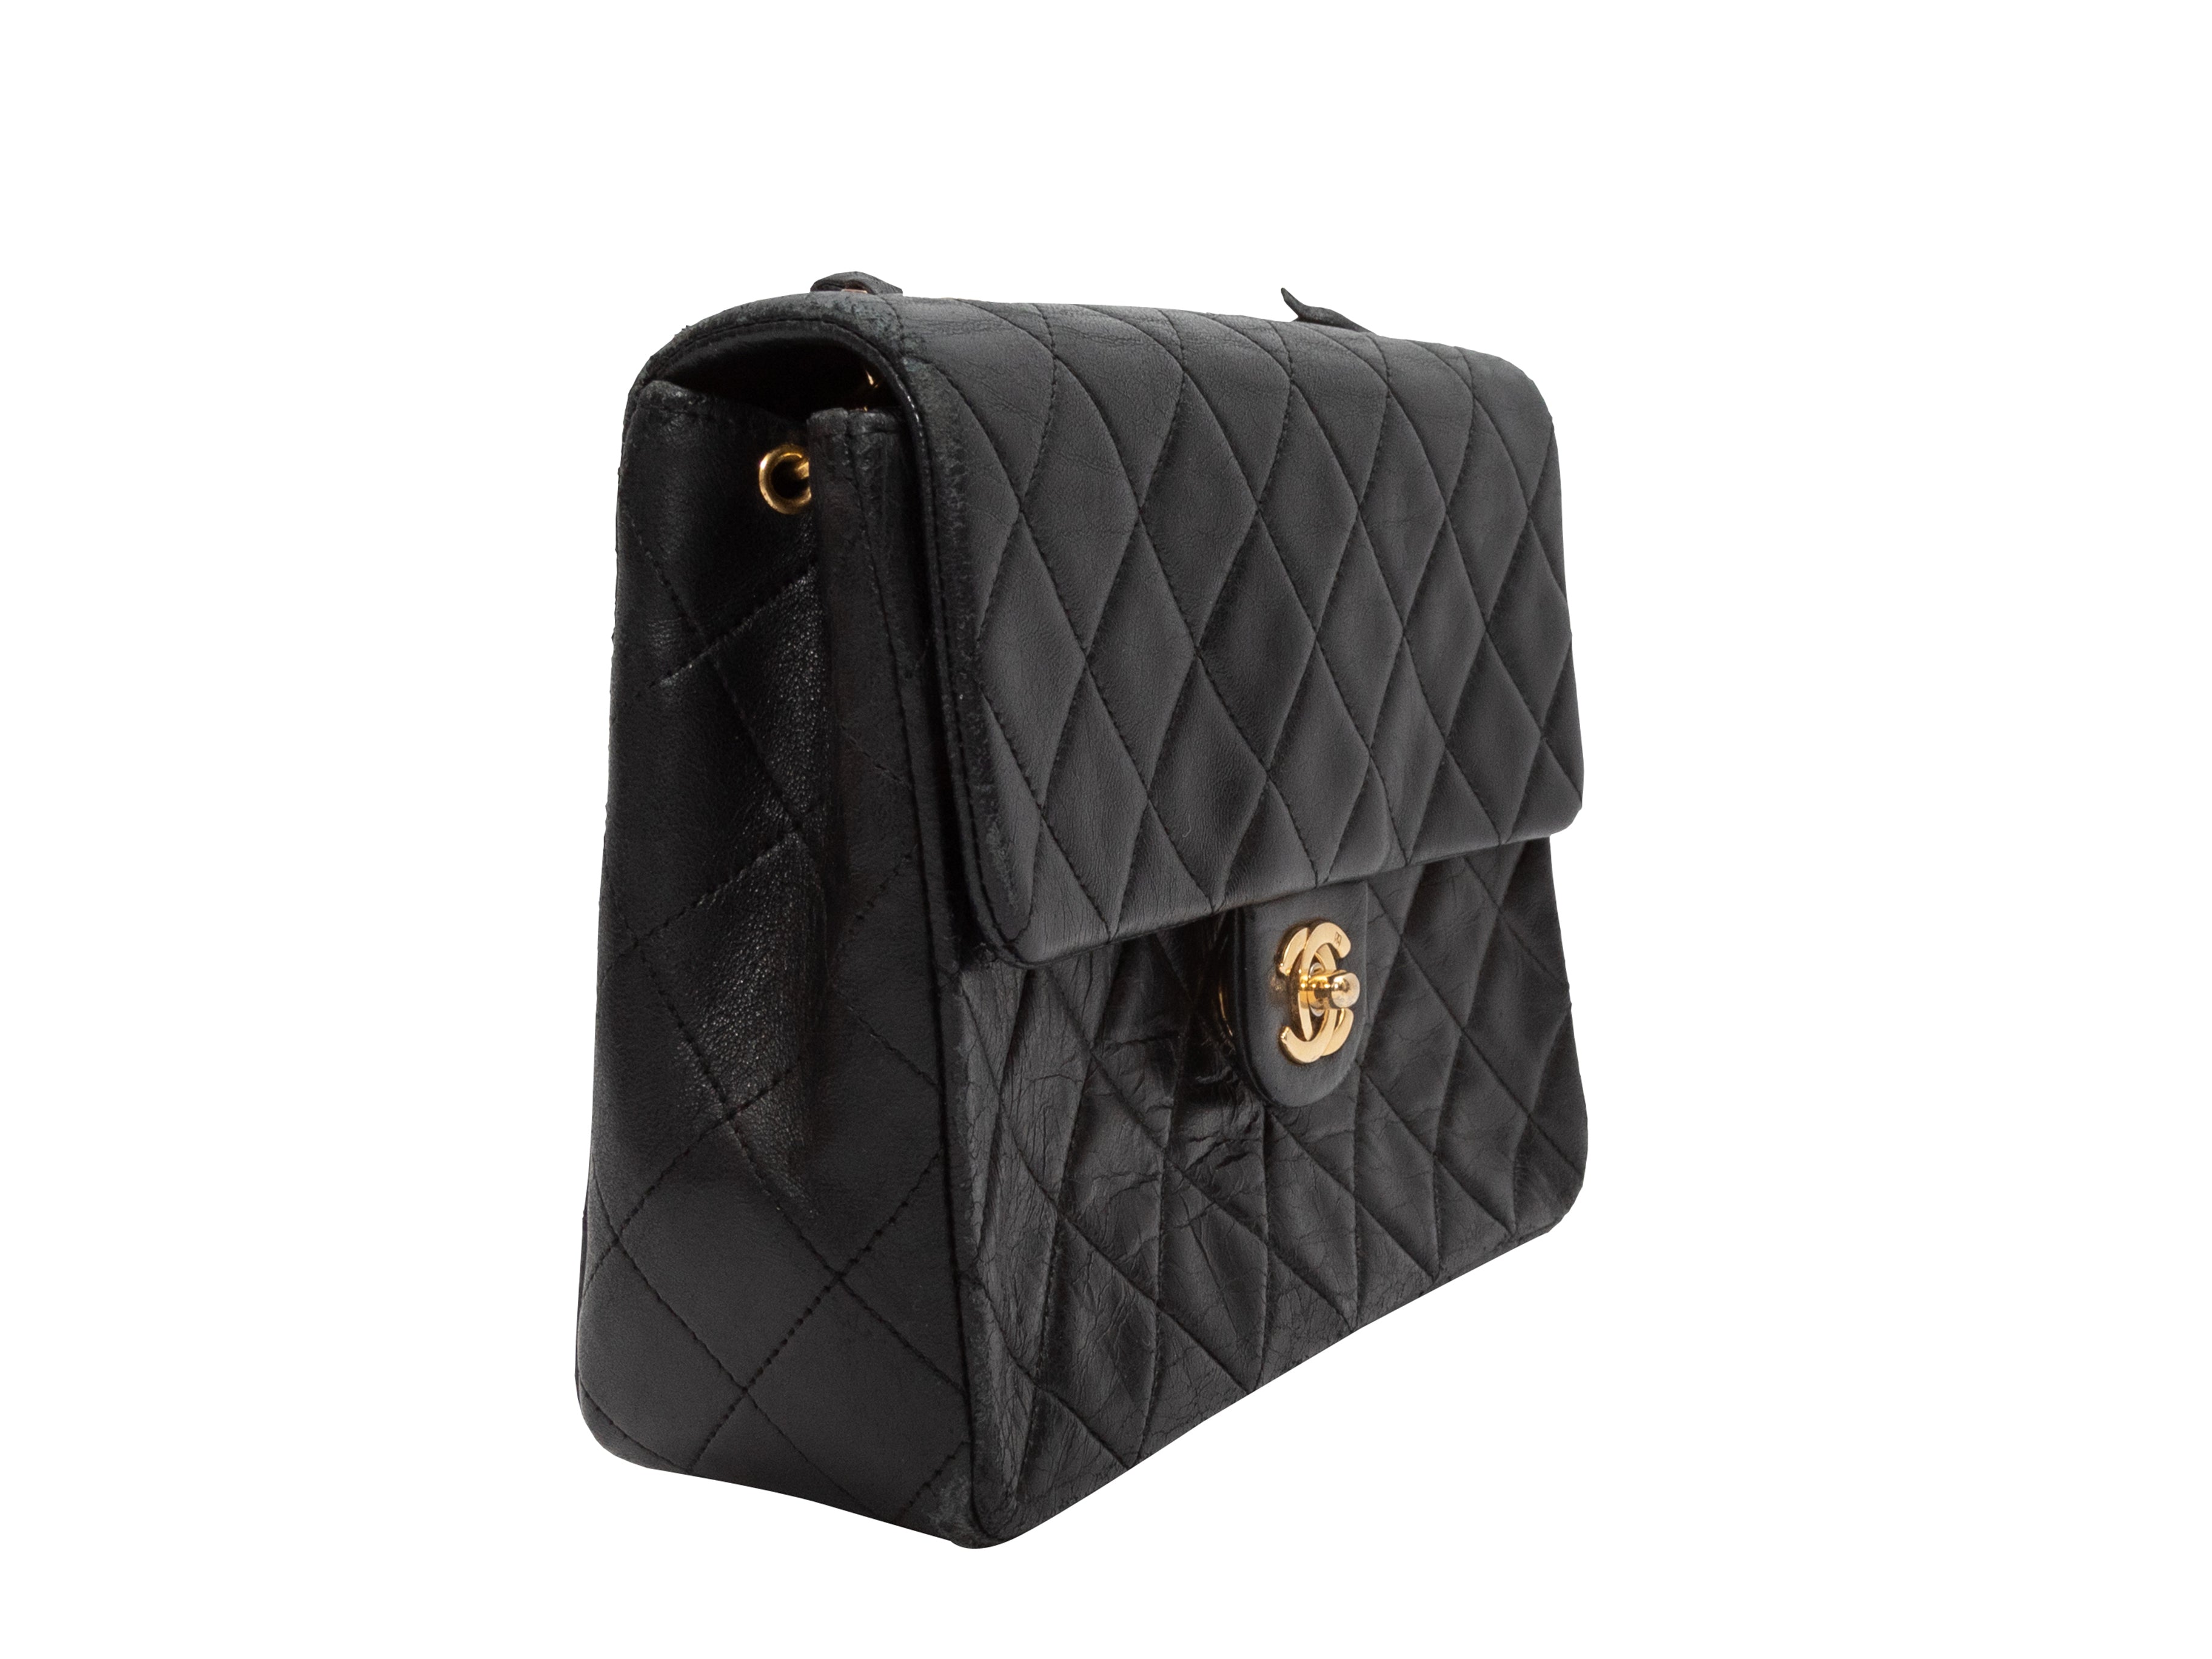 Vintage Black Beauty Chanel Classic Small Single Flap Bag